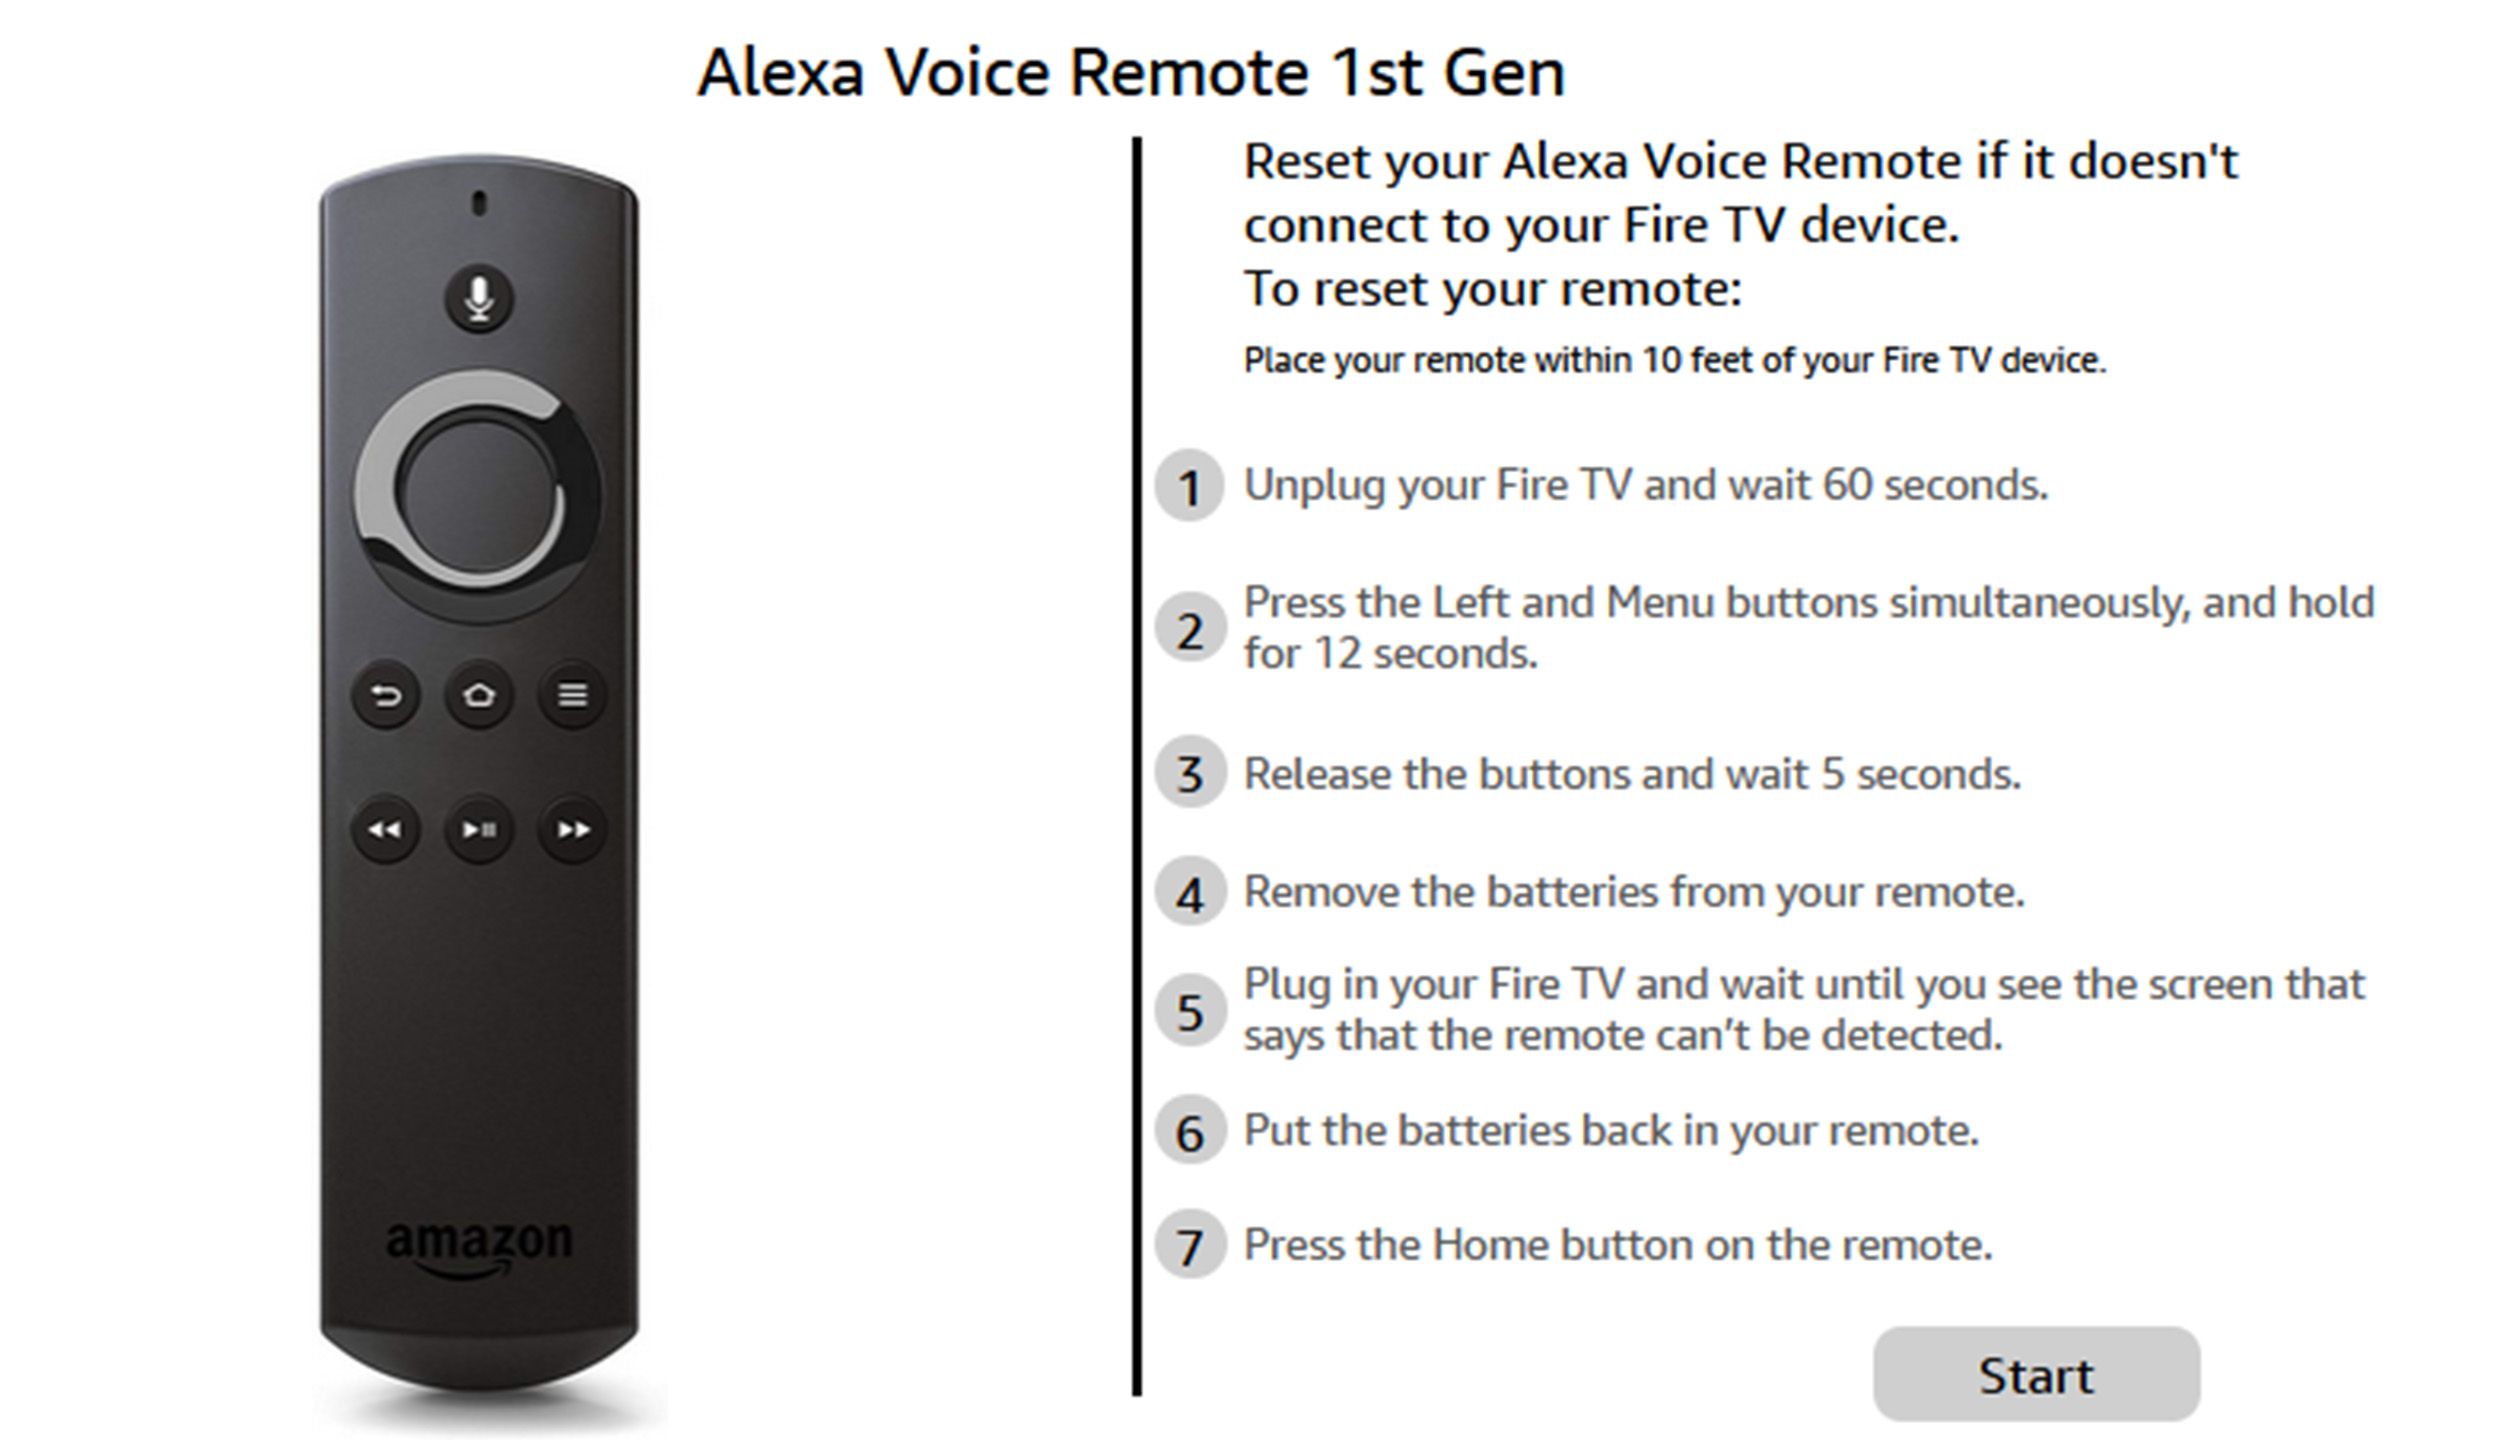 Amazon Voice Remote 1st Generation pairing instructions